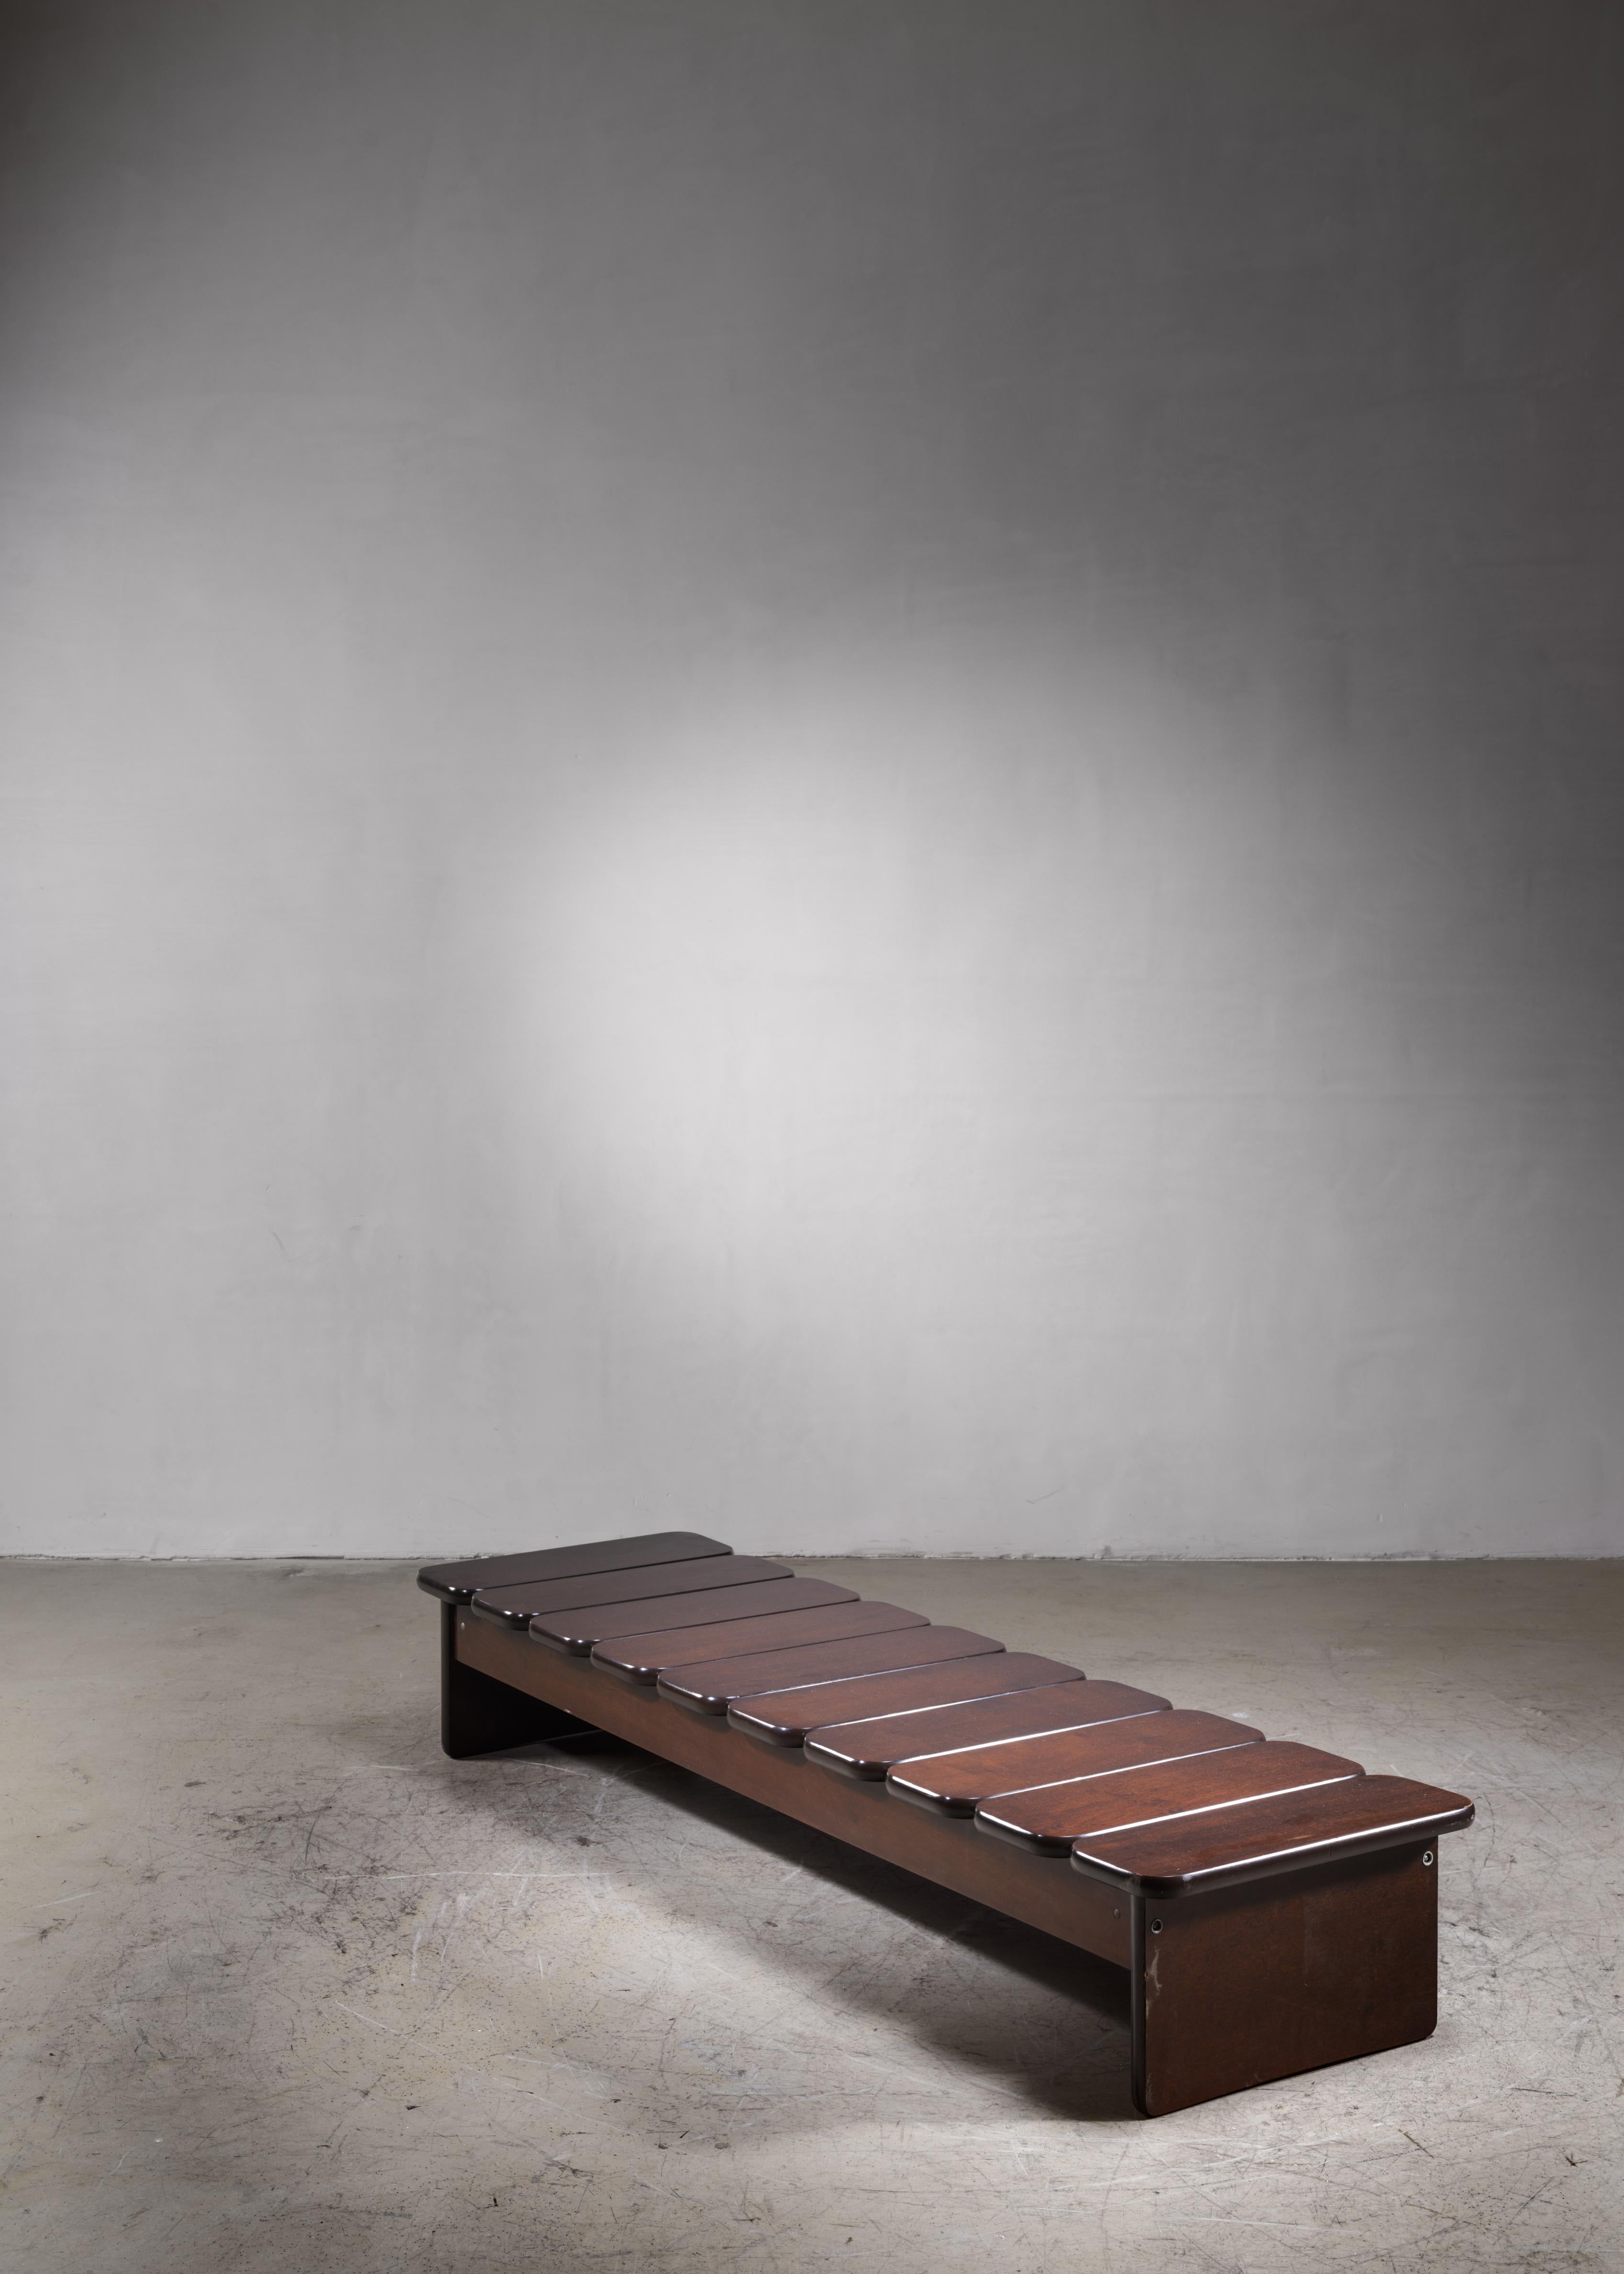 A wooden bench or daybed by Brazilian artist Geraldo de Barros for Hobjeto

Geraldo de Barros (1923-1998) was a Brazilian painter, photographer and designer.
He was also active as a furniture designer, from 1954 at Unilabor, the company he